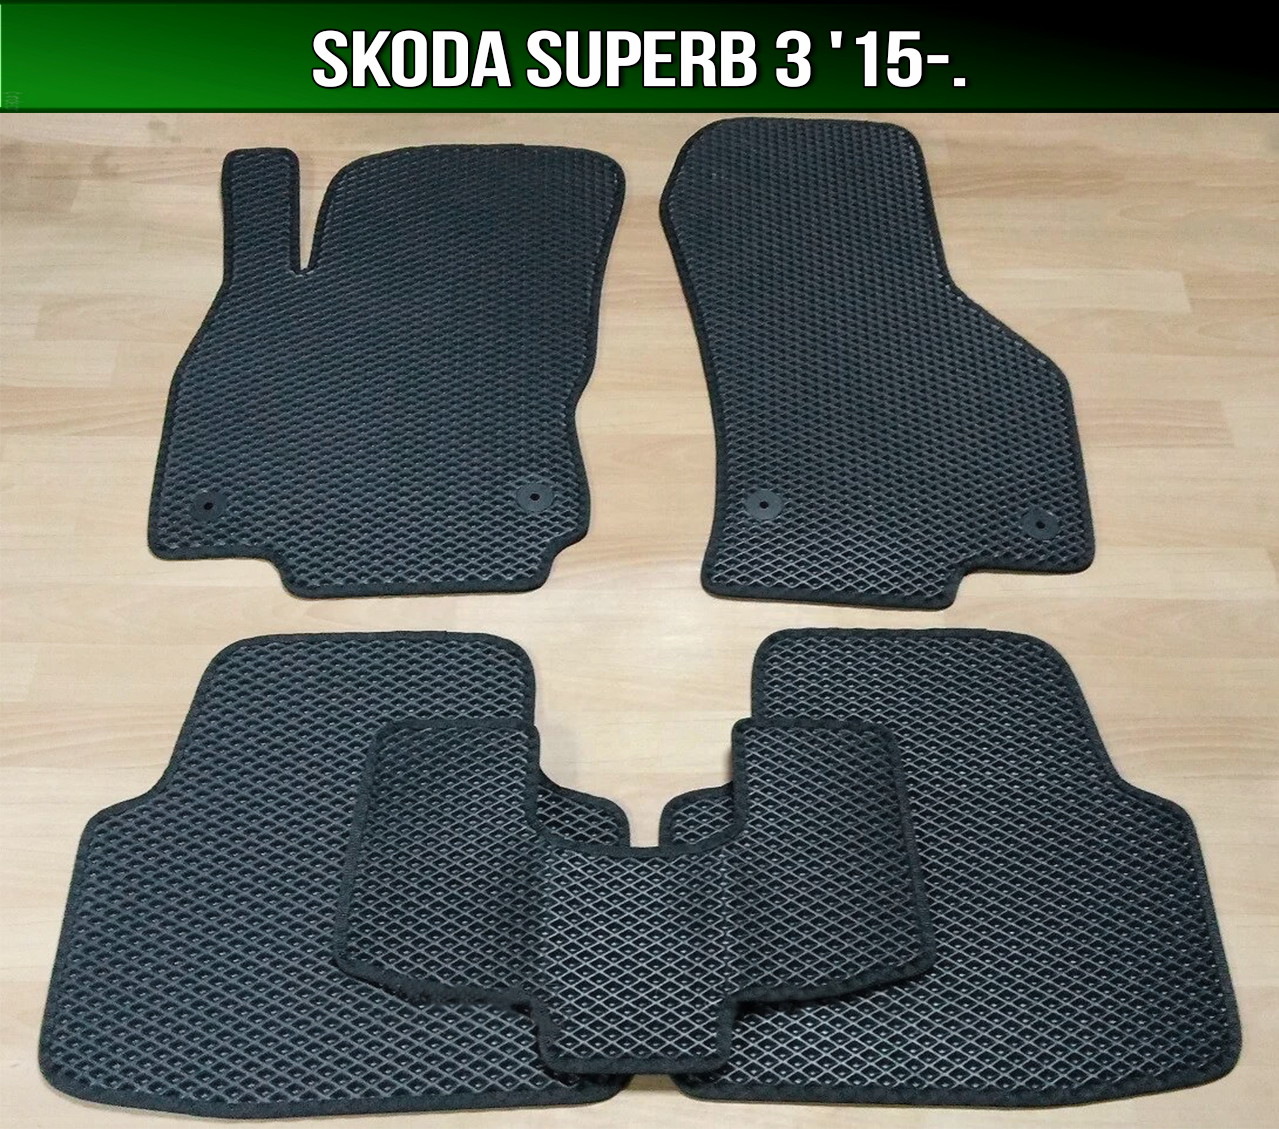 ЄВА килимки Skoda Superb 3 '15-. EVA килими Шкода Суперб